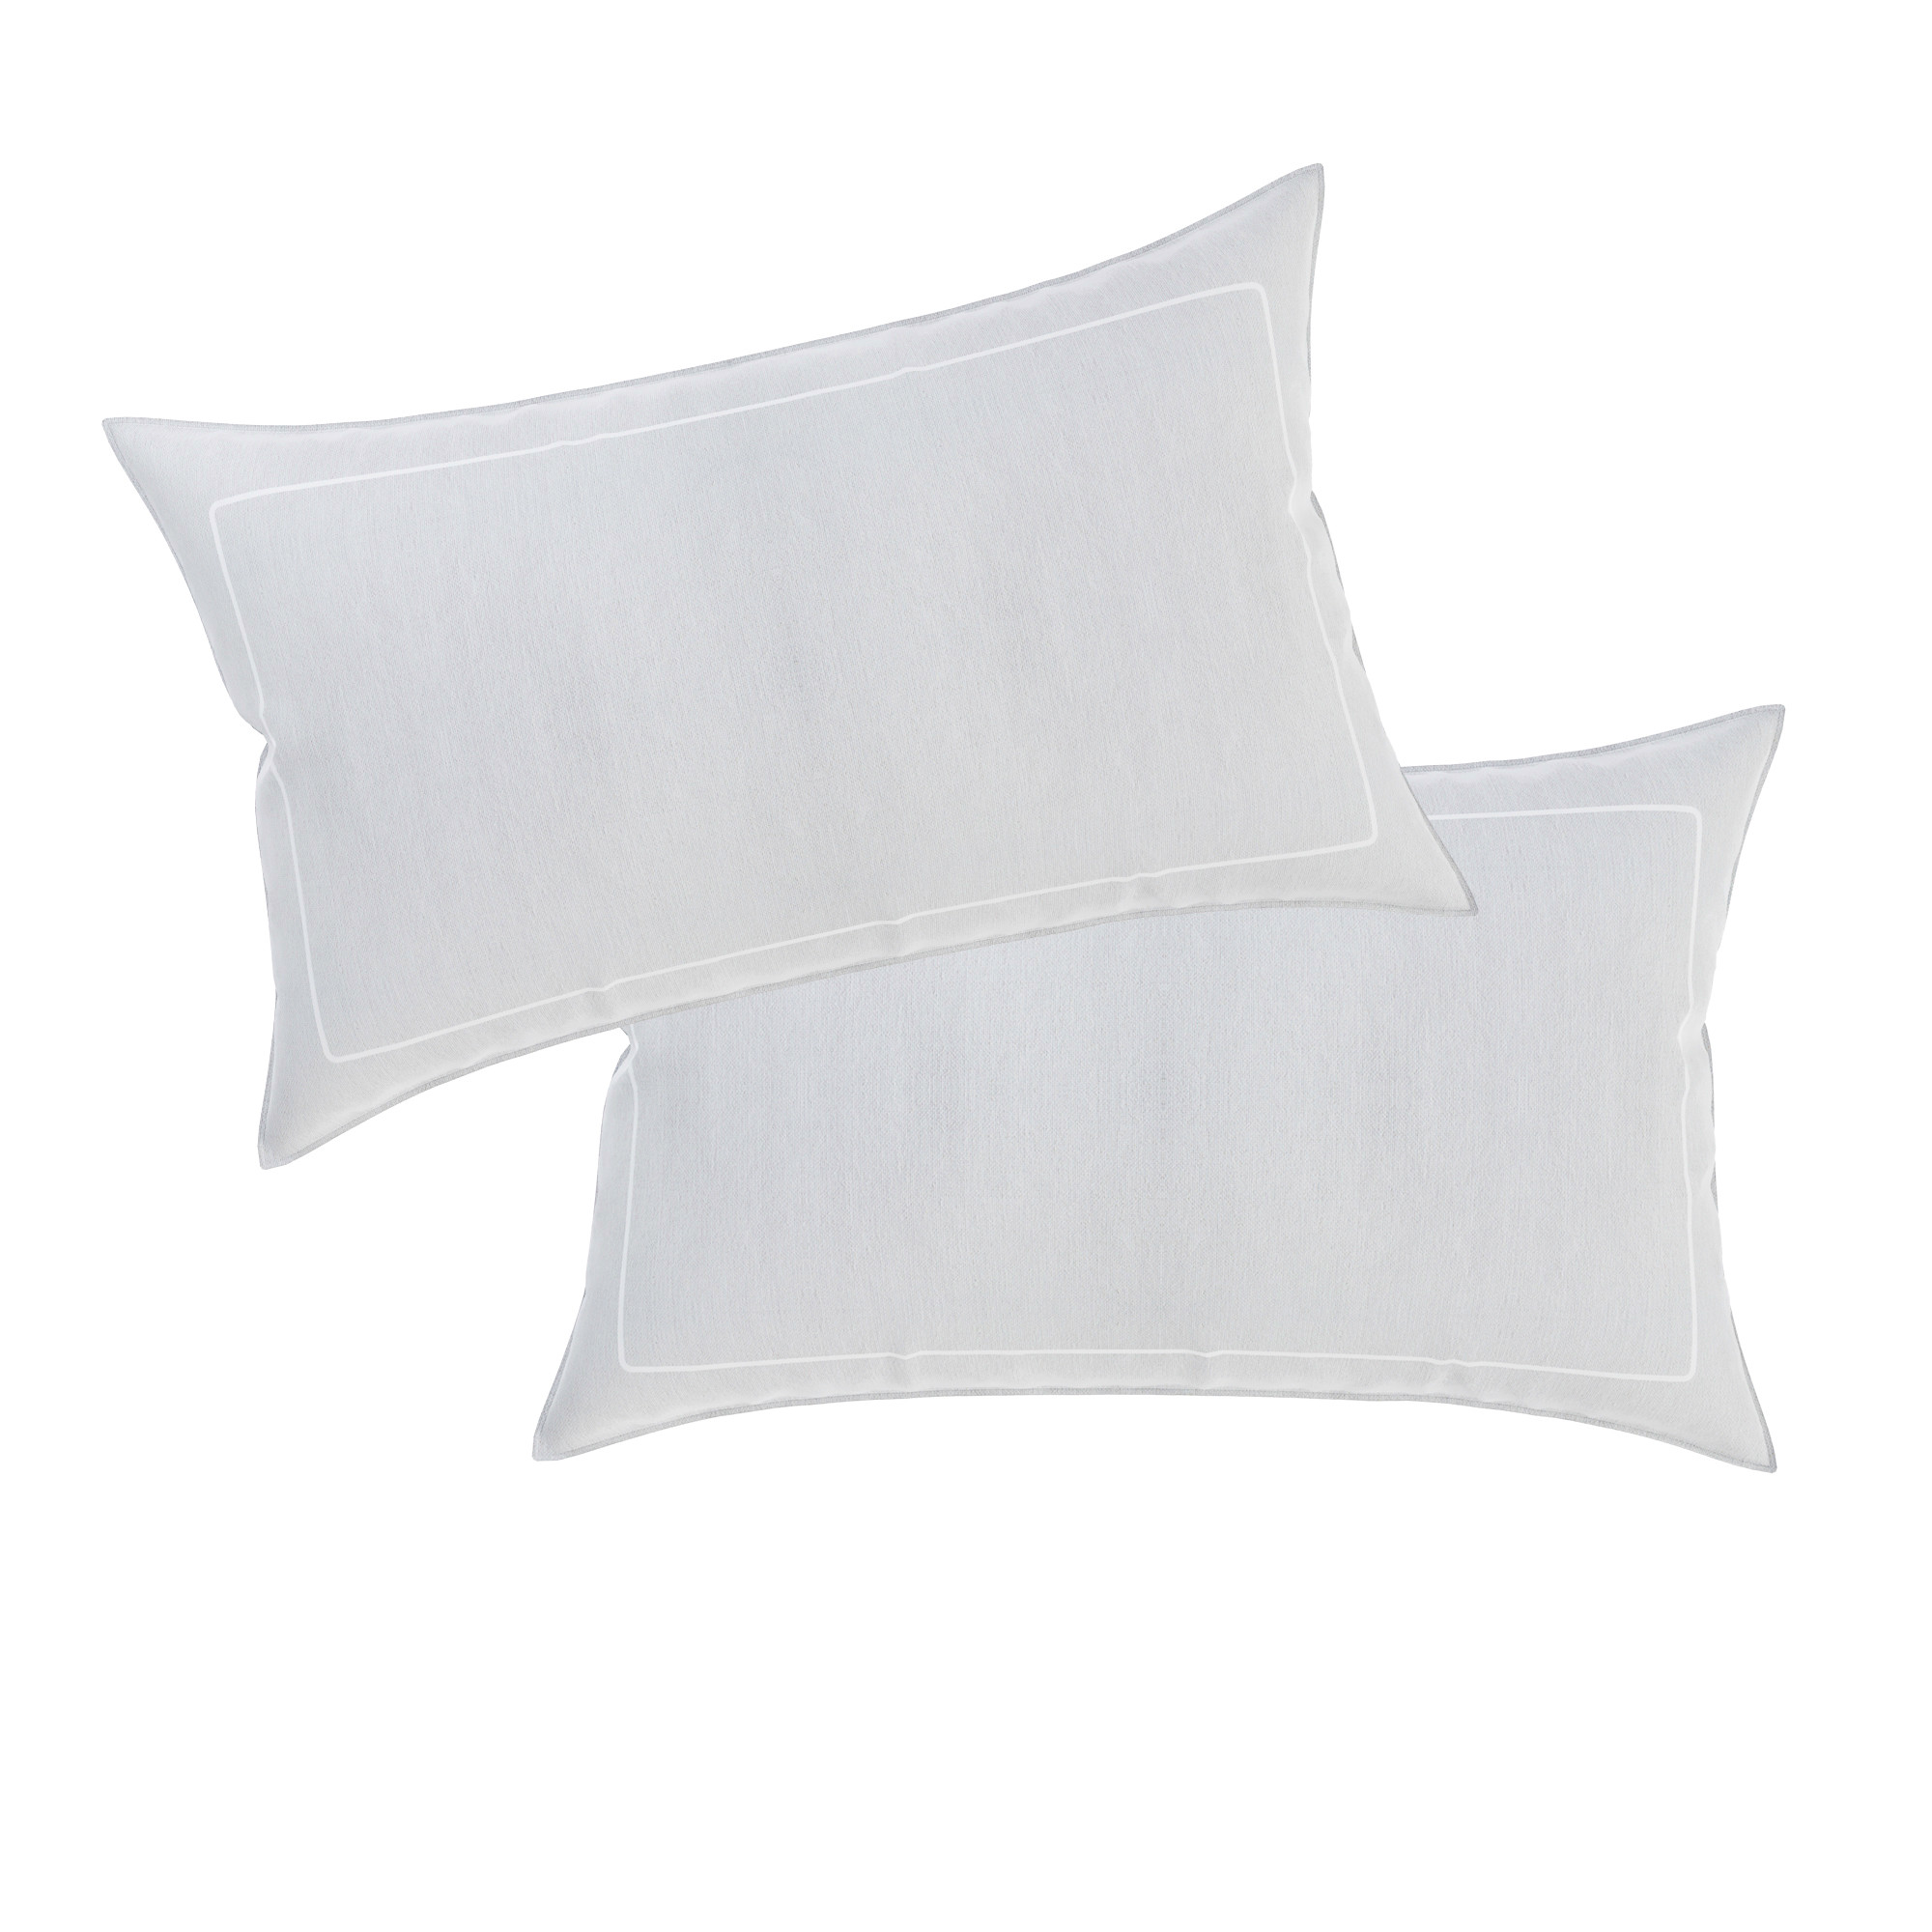 Kuber Industries Pillow Cover | Cotton Pillow Cover | Pillow Cover for Bedroom | Cushion Pillow Cover for Living Room | Plain Border Pillow Cover Set |White